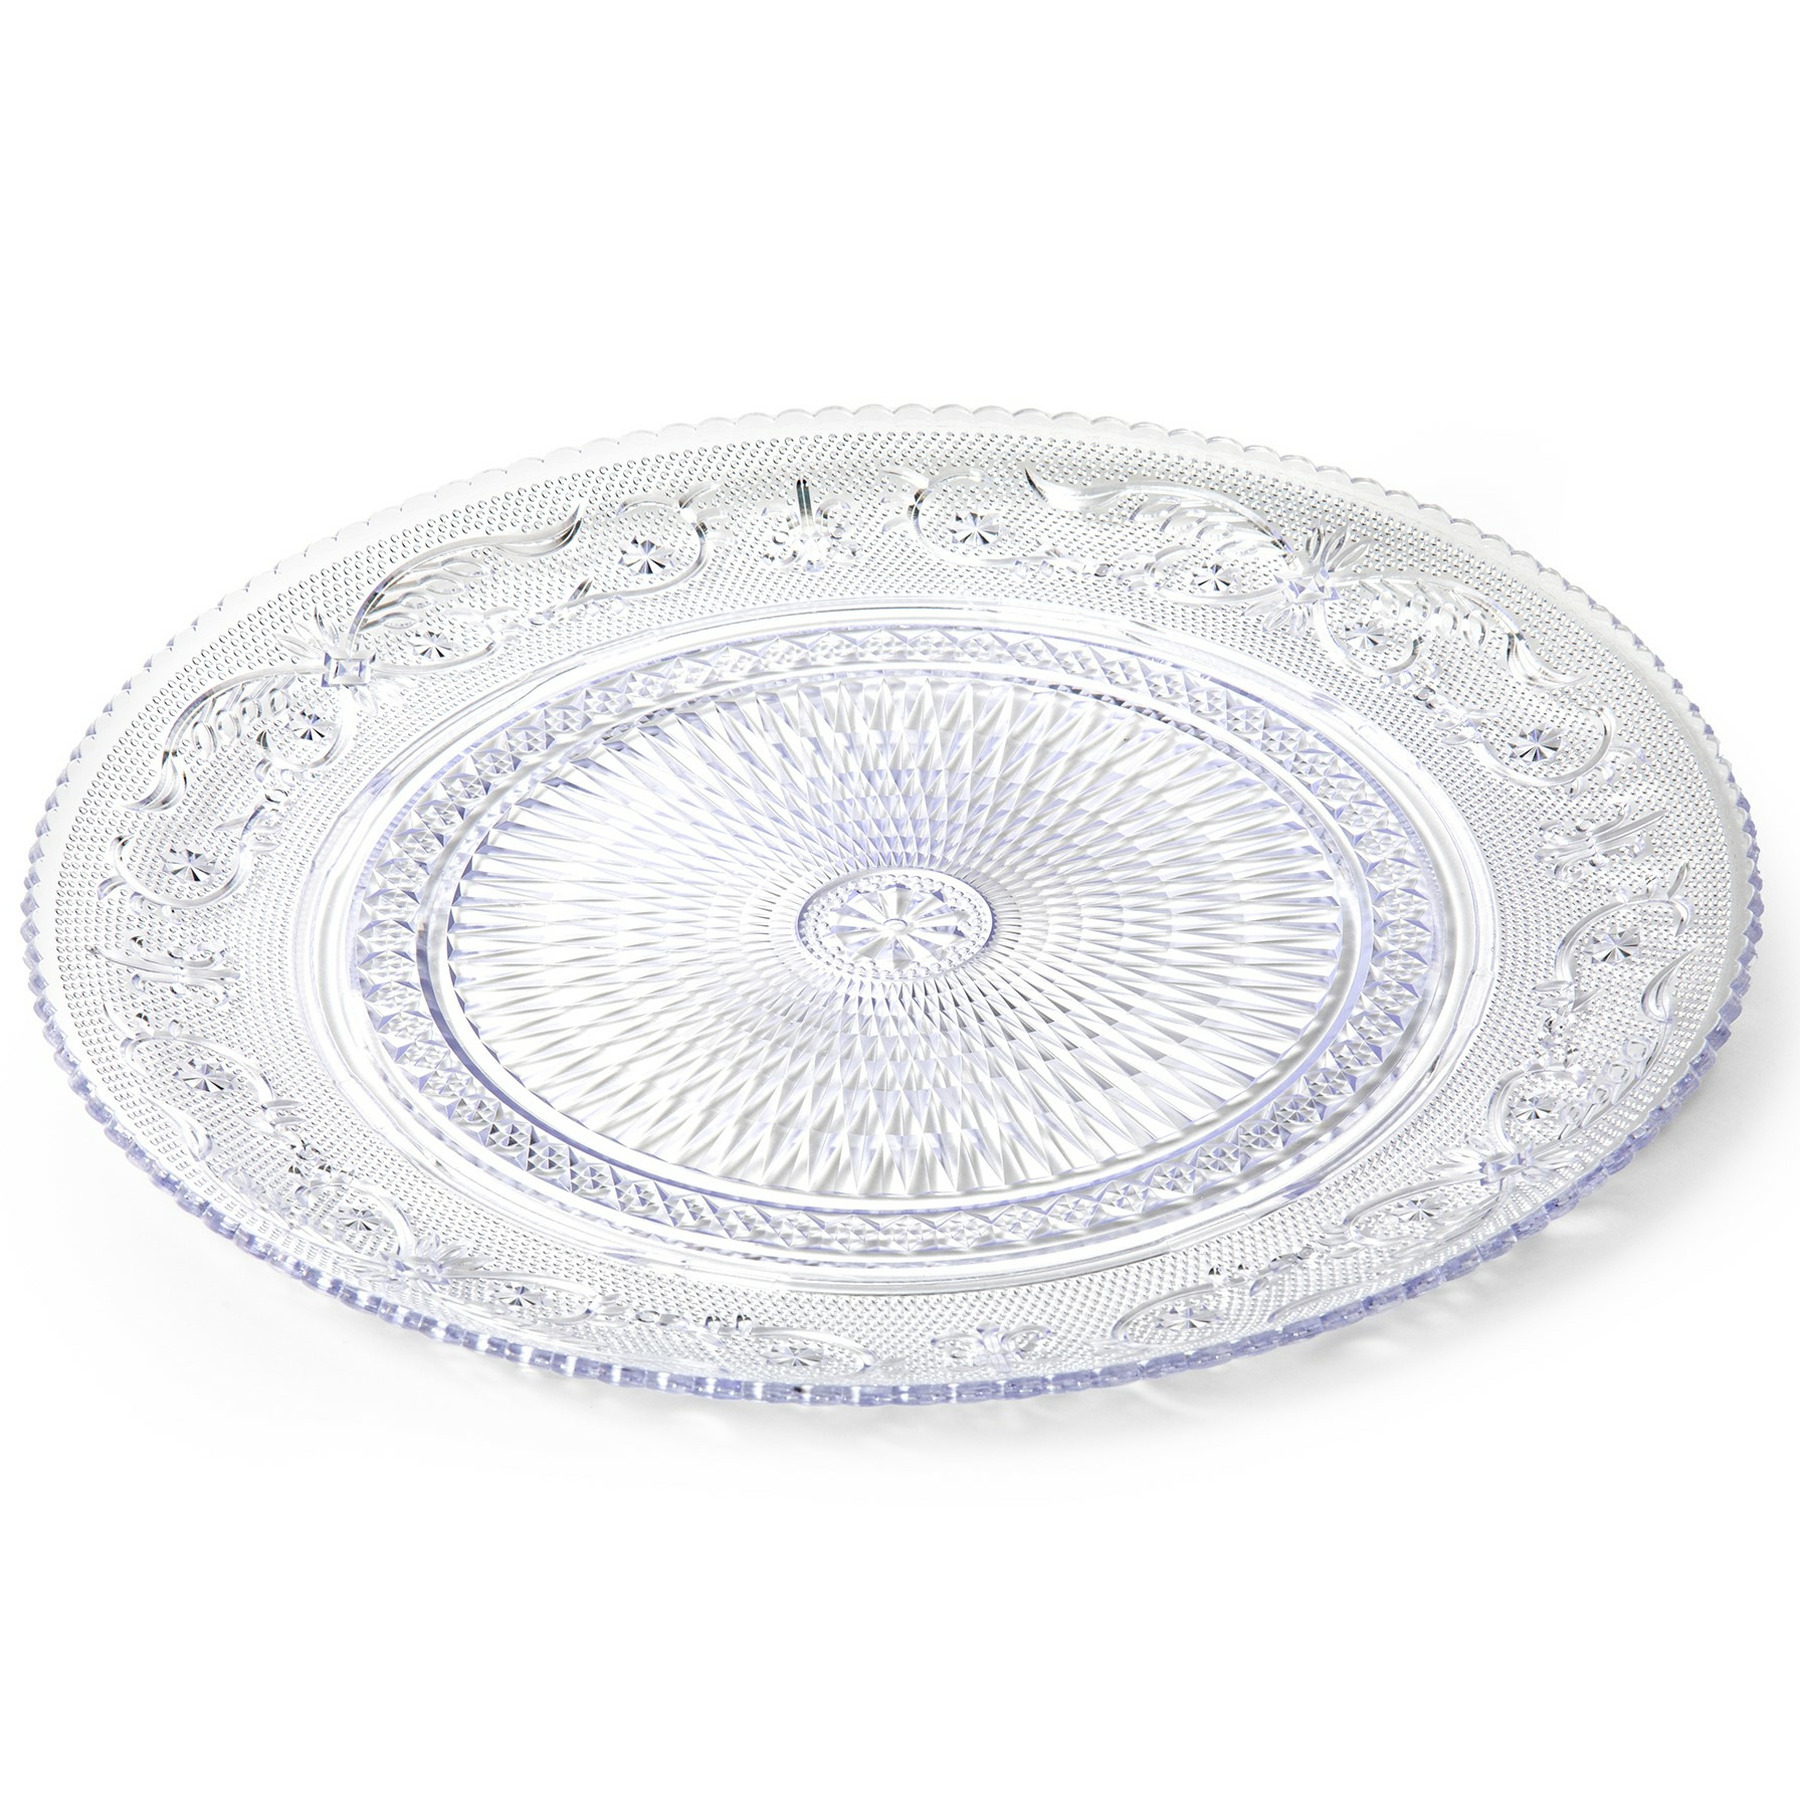 Onbreekbare Ontbijt-gebakbordjes kunststof kristal stijl transparant Dia 18 cm